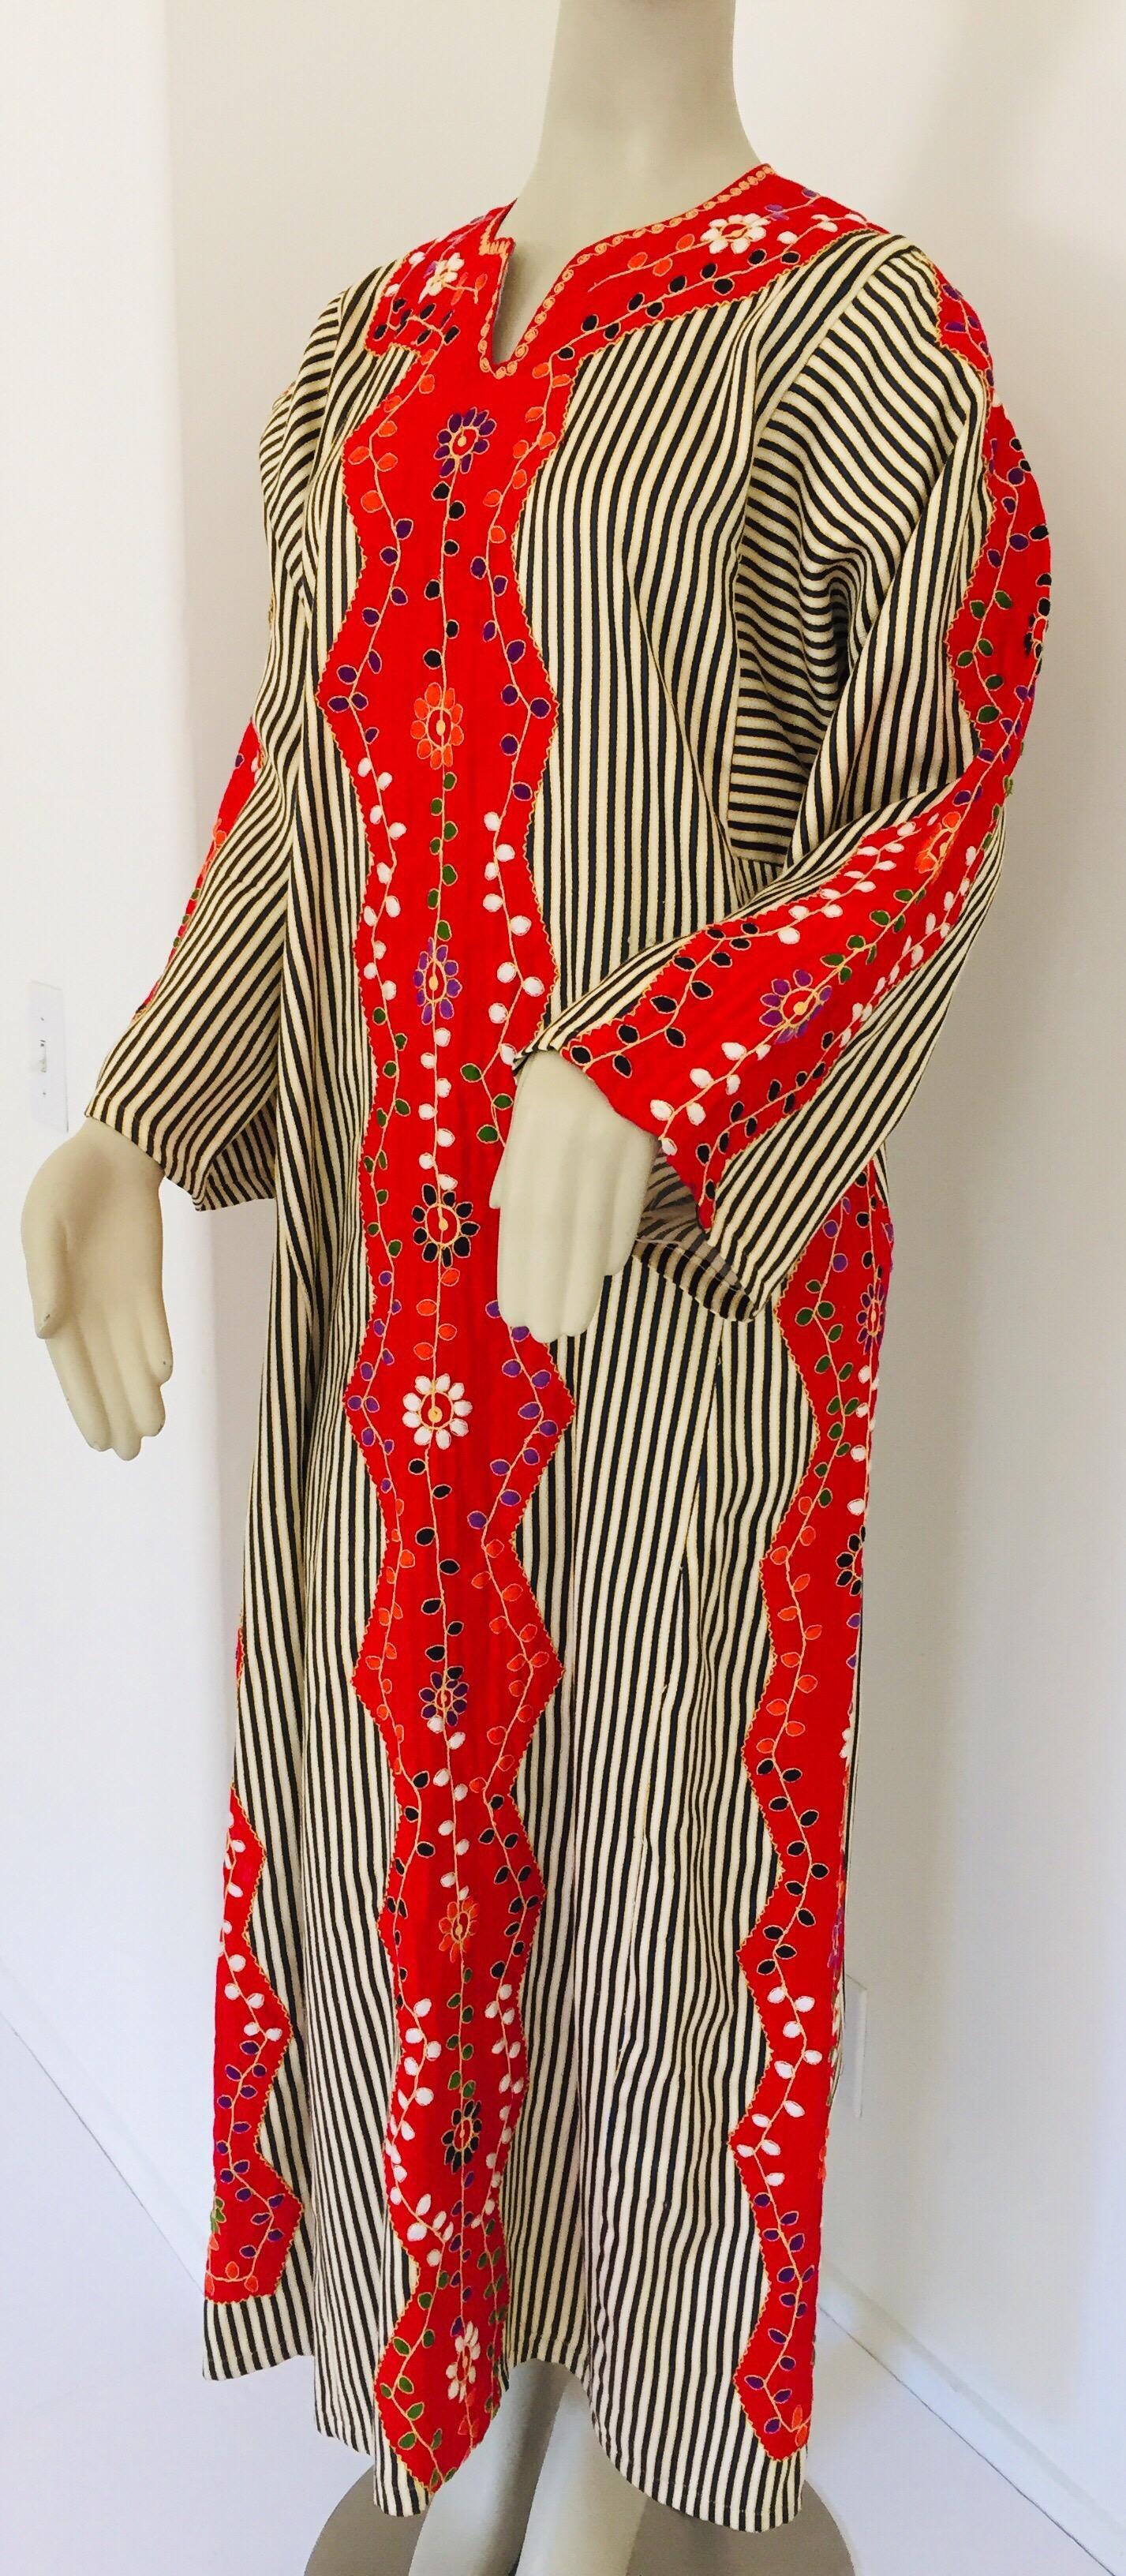 Women's or Men's Vintage Middle Eastern Ethnic Caftan, Kaftan Maxi Dress For Sale